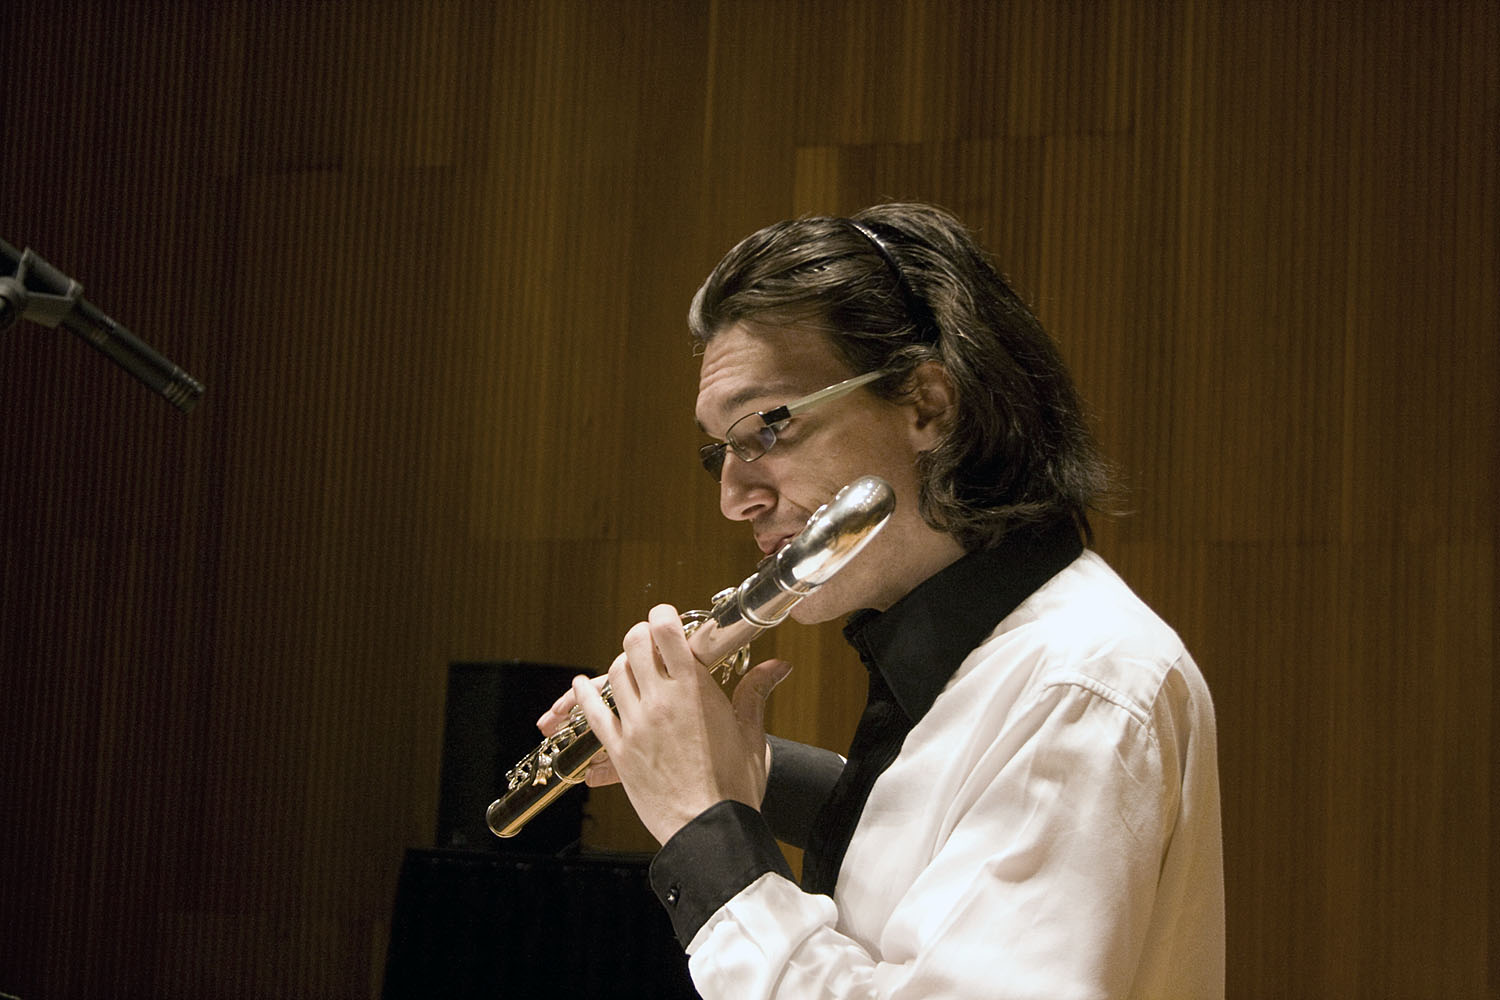 Mario Caroli Flutist With The Slee Sinfonietta Conducted By Brad Lubman In Performance Of David Felders Inner Sky  3